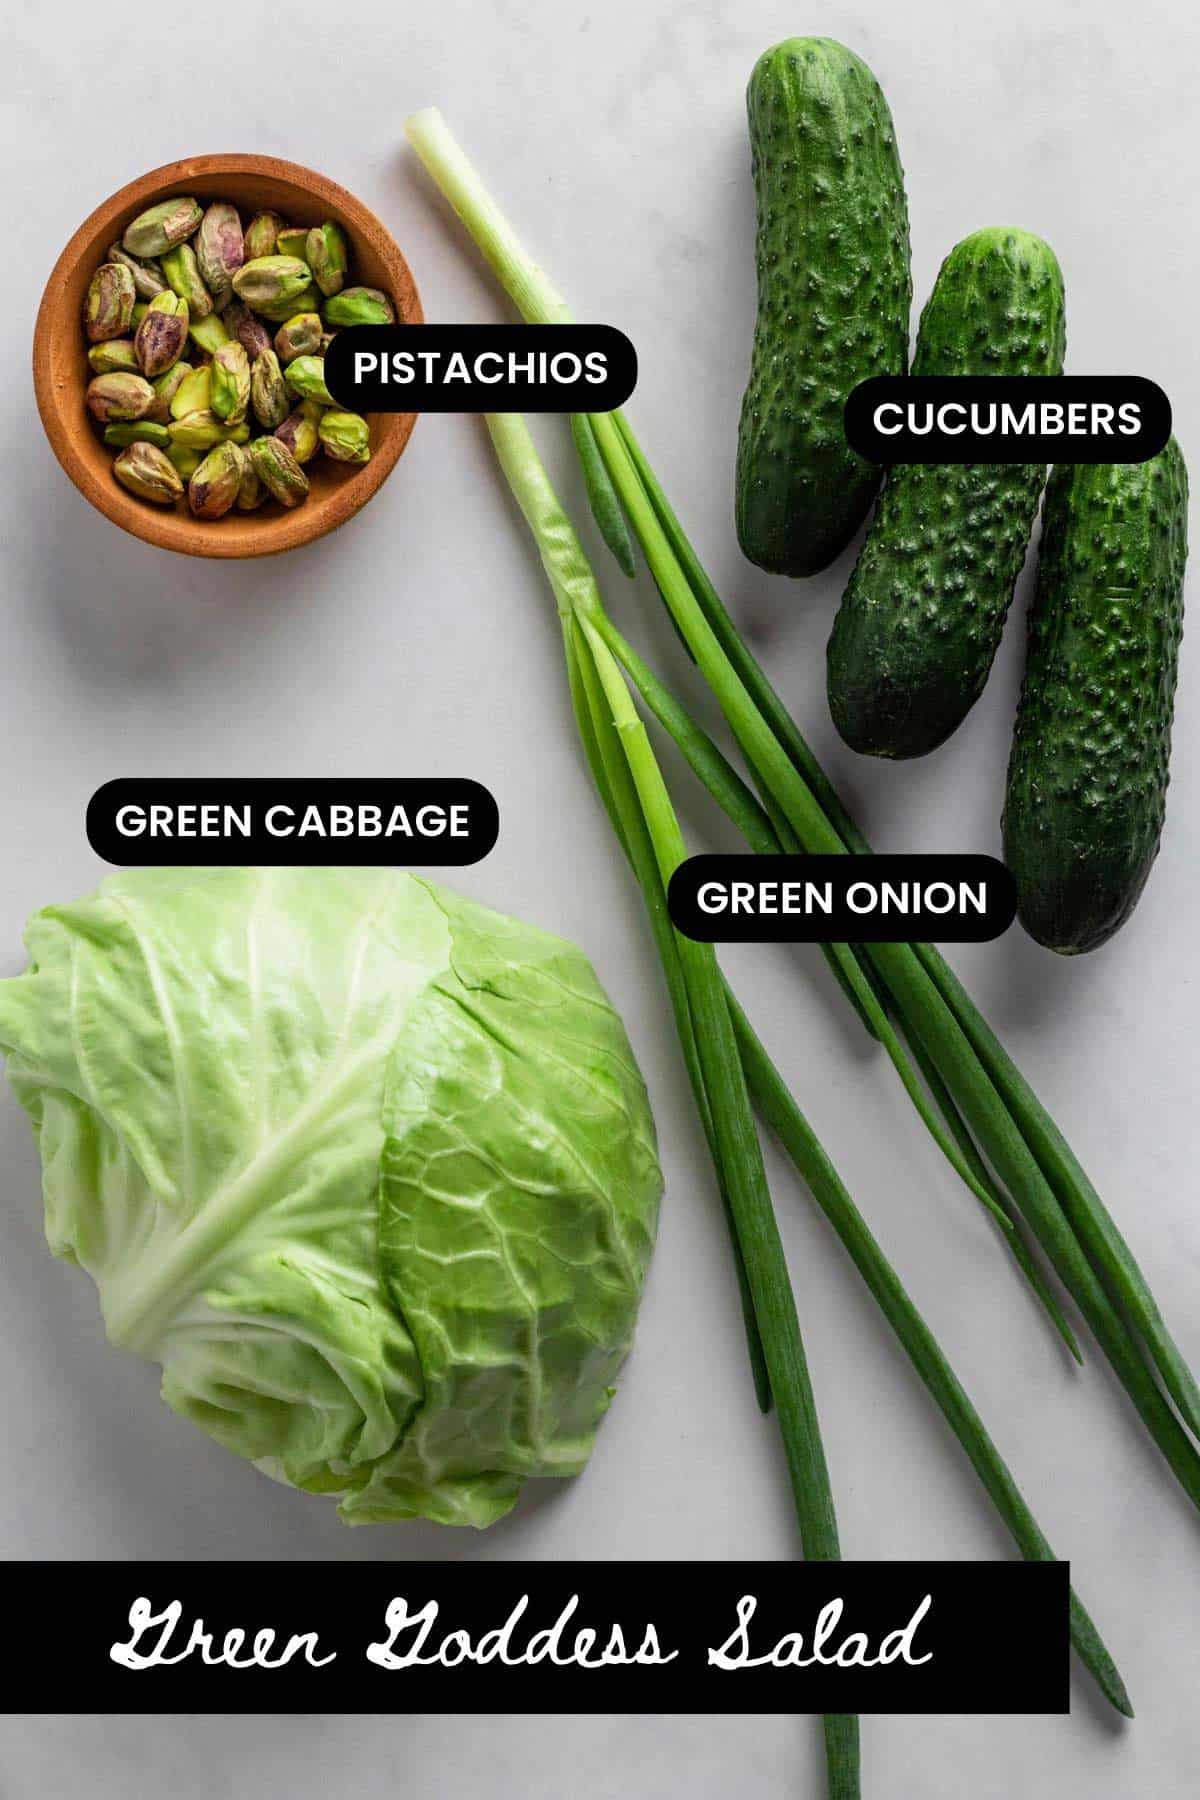 green goddess salad ingredients